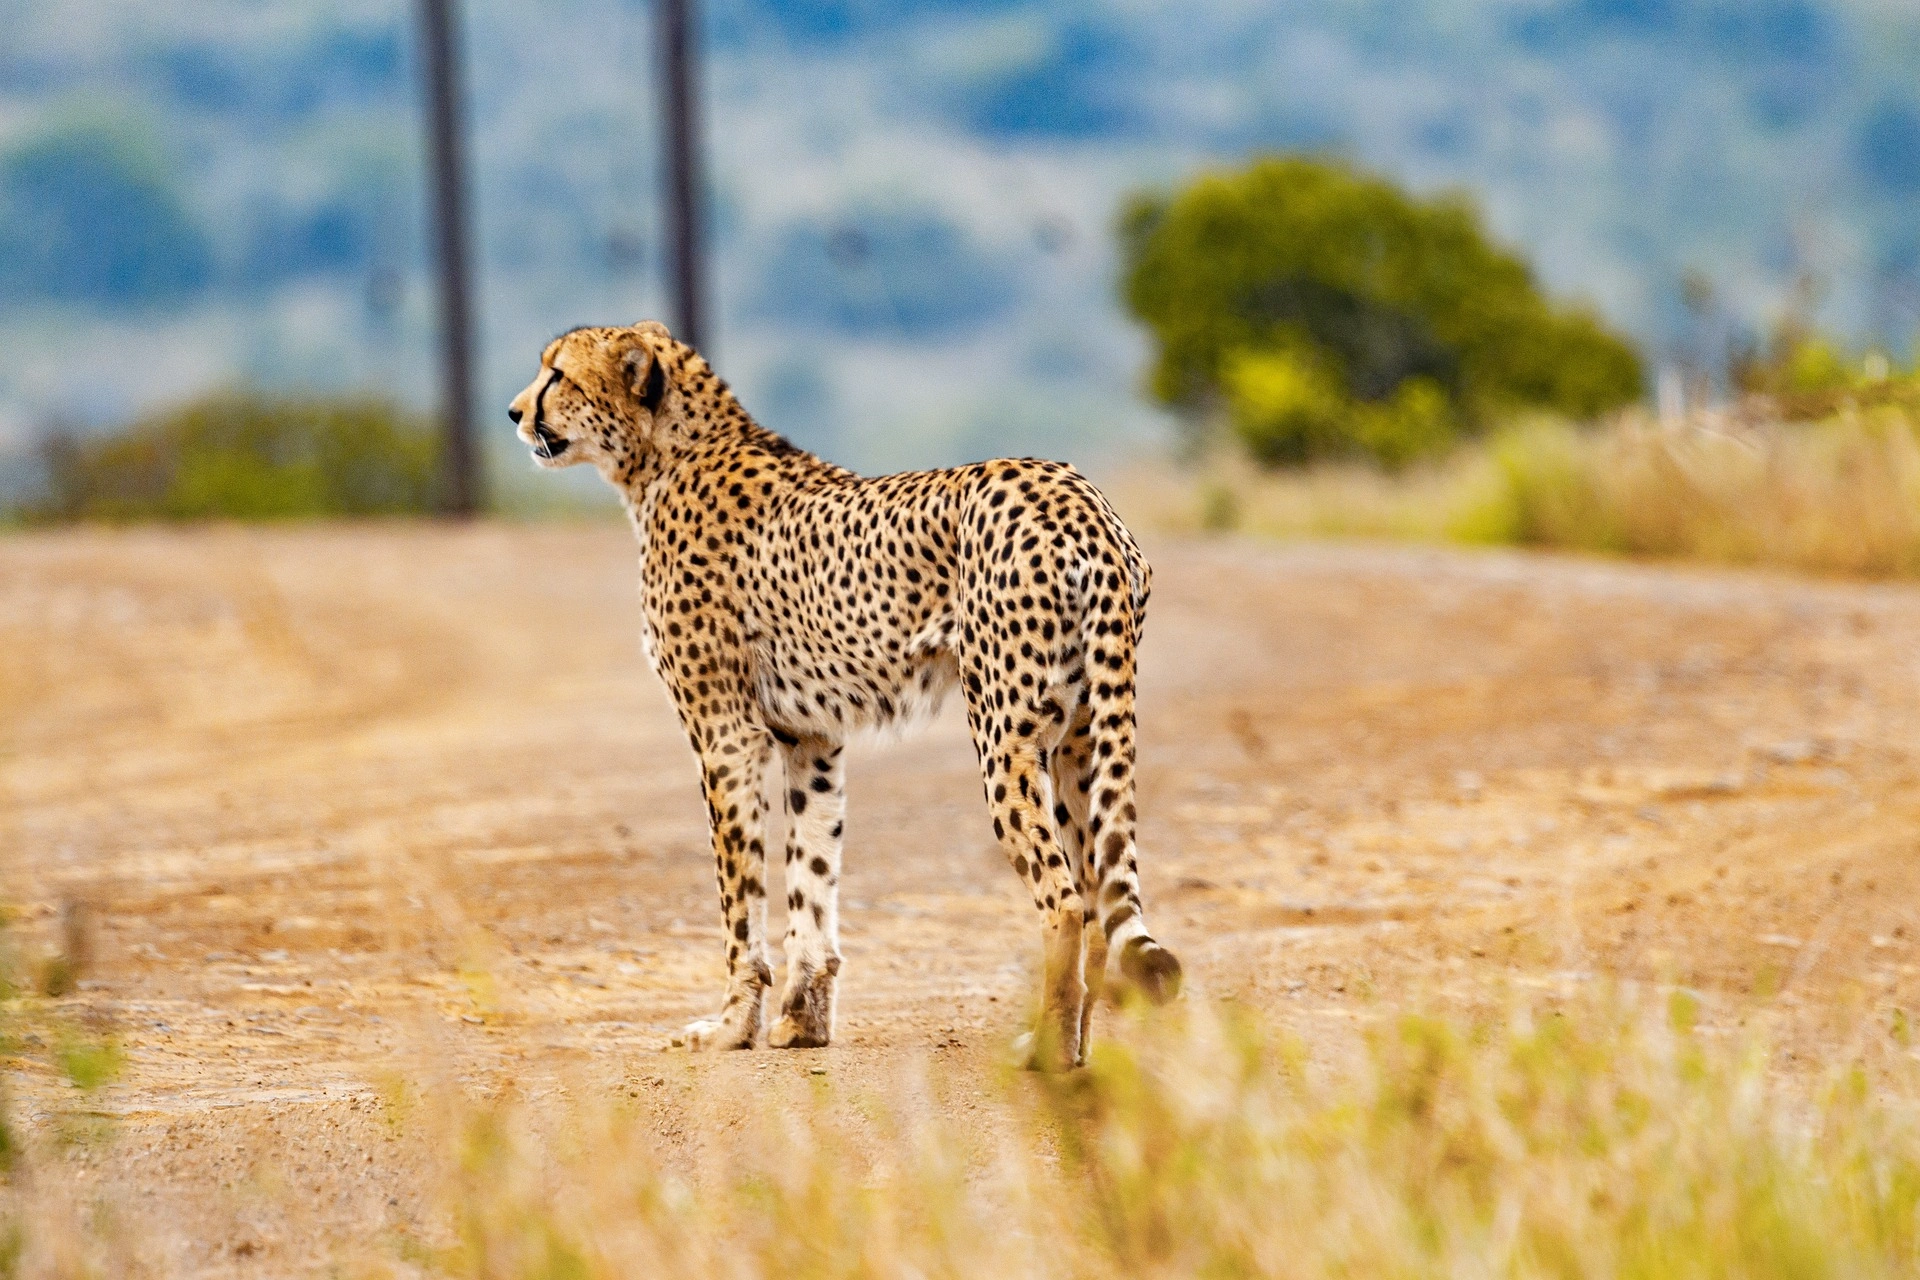 kenya safari holidays - cheetah